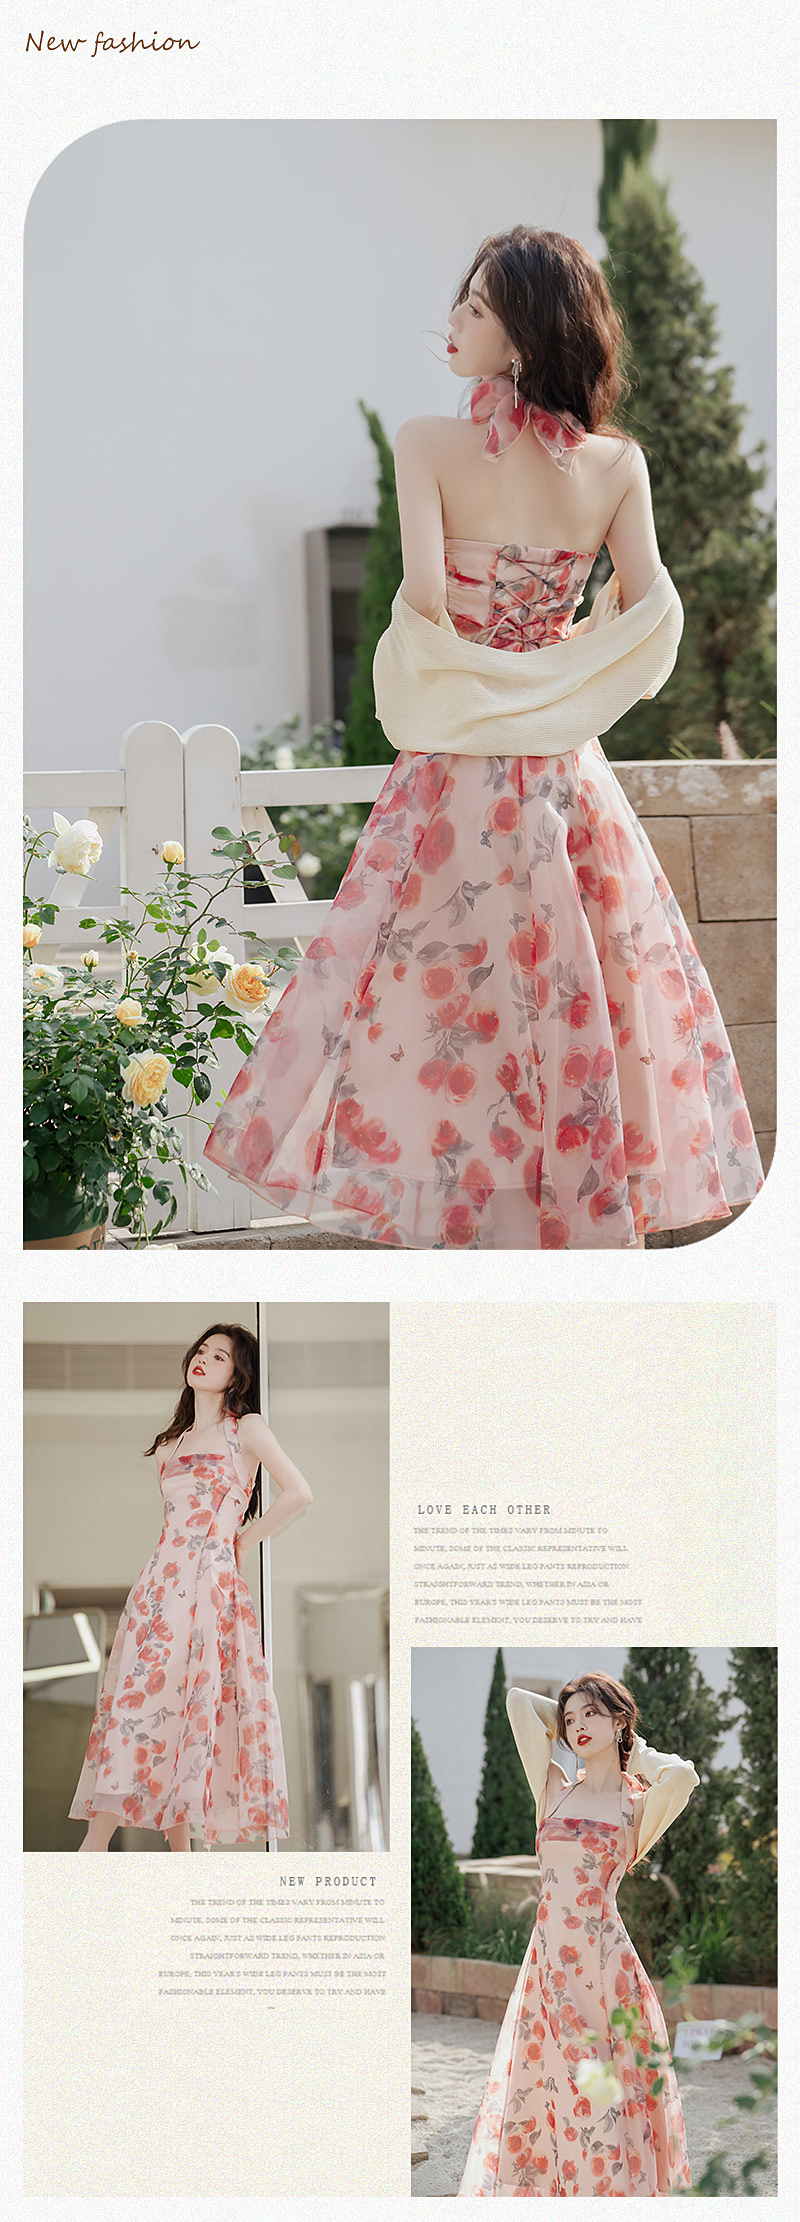 Beautiful-Floral-Printed-Halter-Casual-Chiffon-Dress-Cardigan-Top13